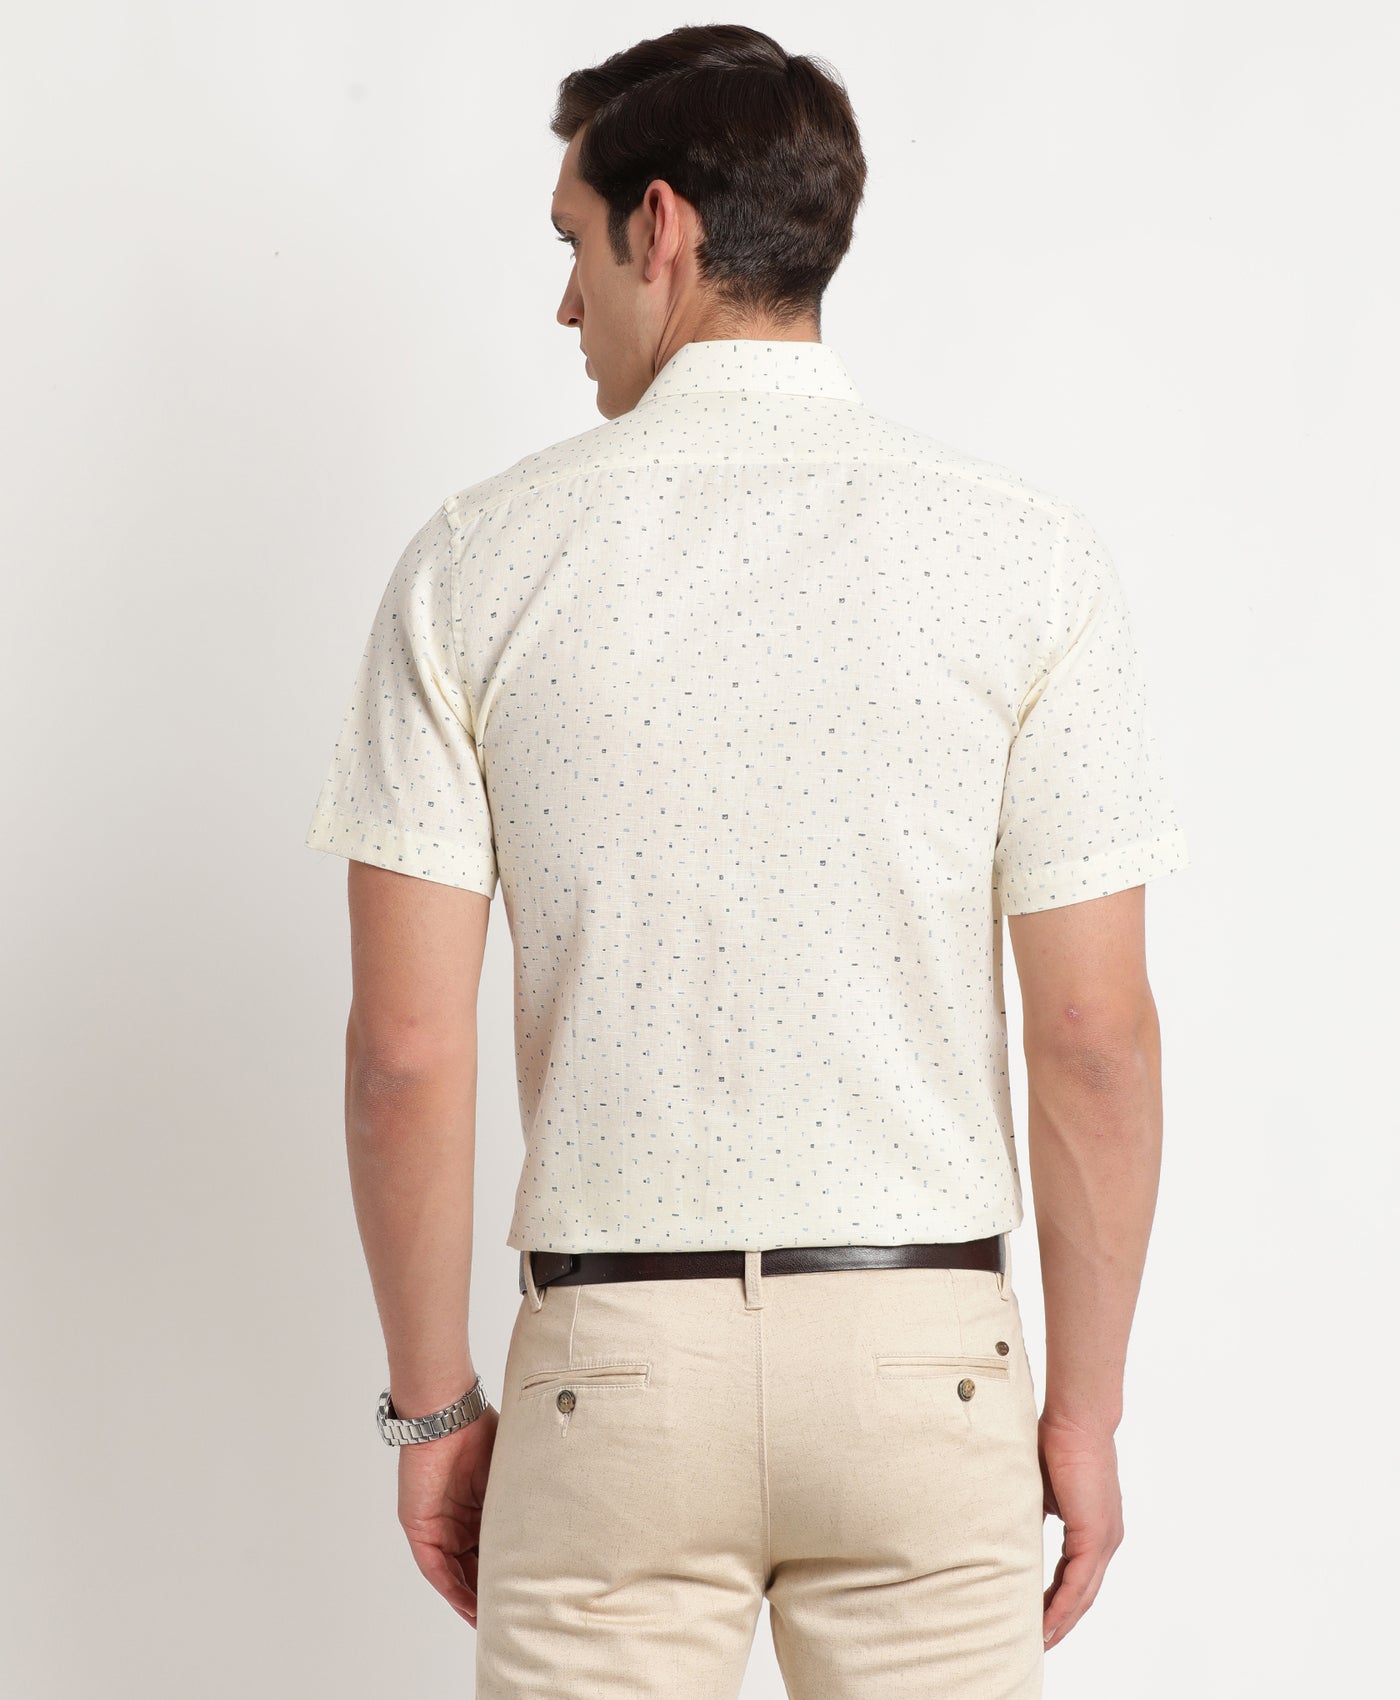 Cotton Linen Cream Printed Regular Fit Half Sleeve Formal Shirt